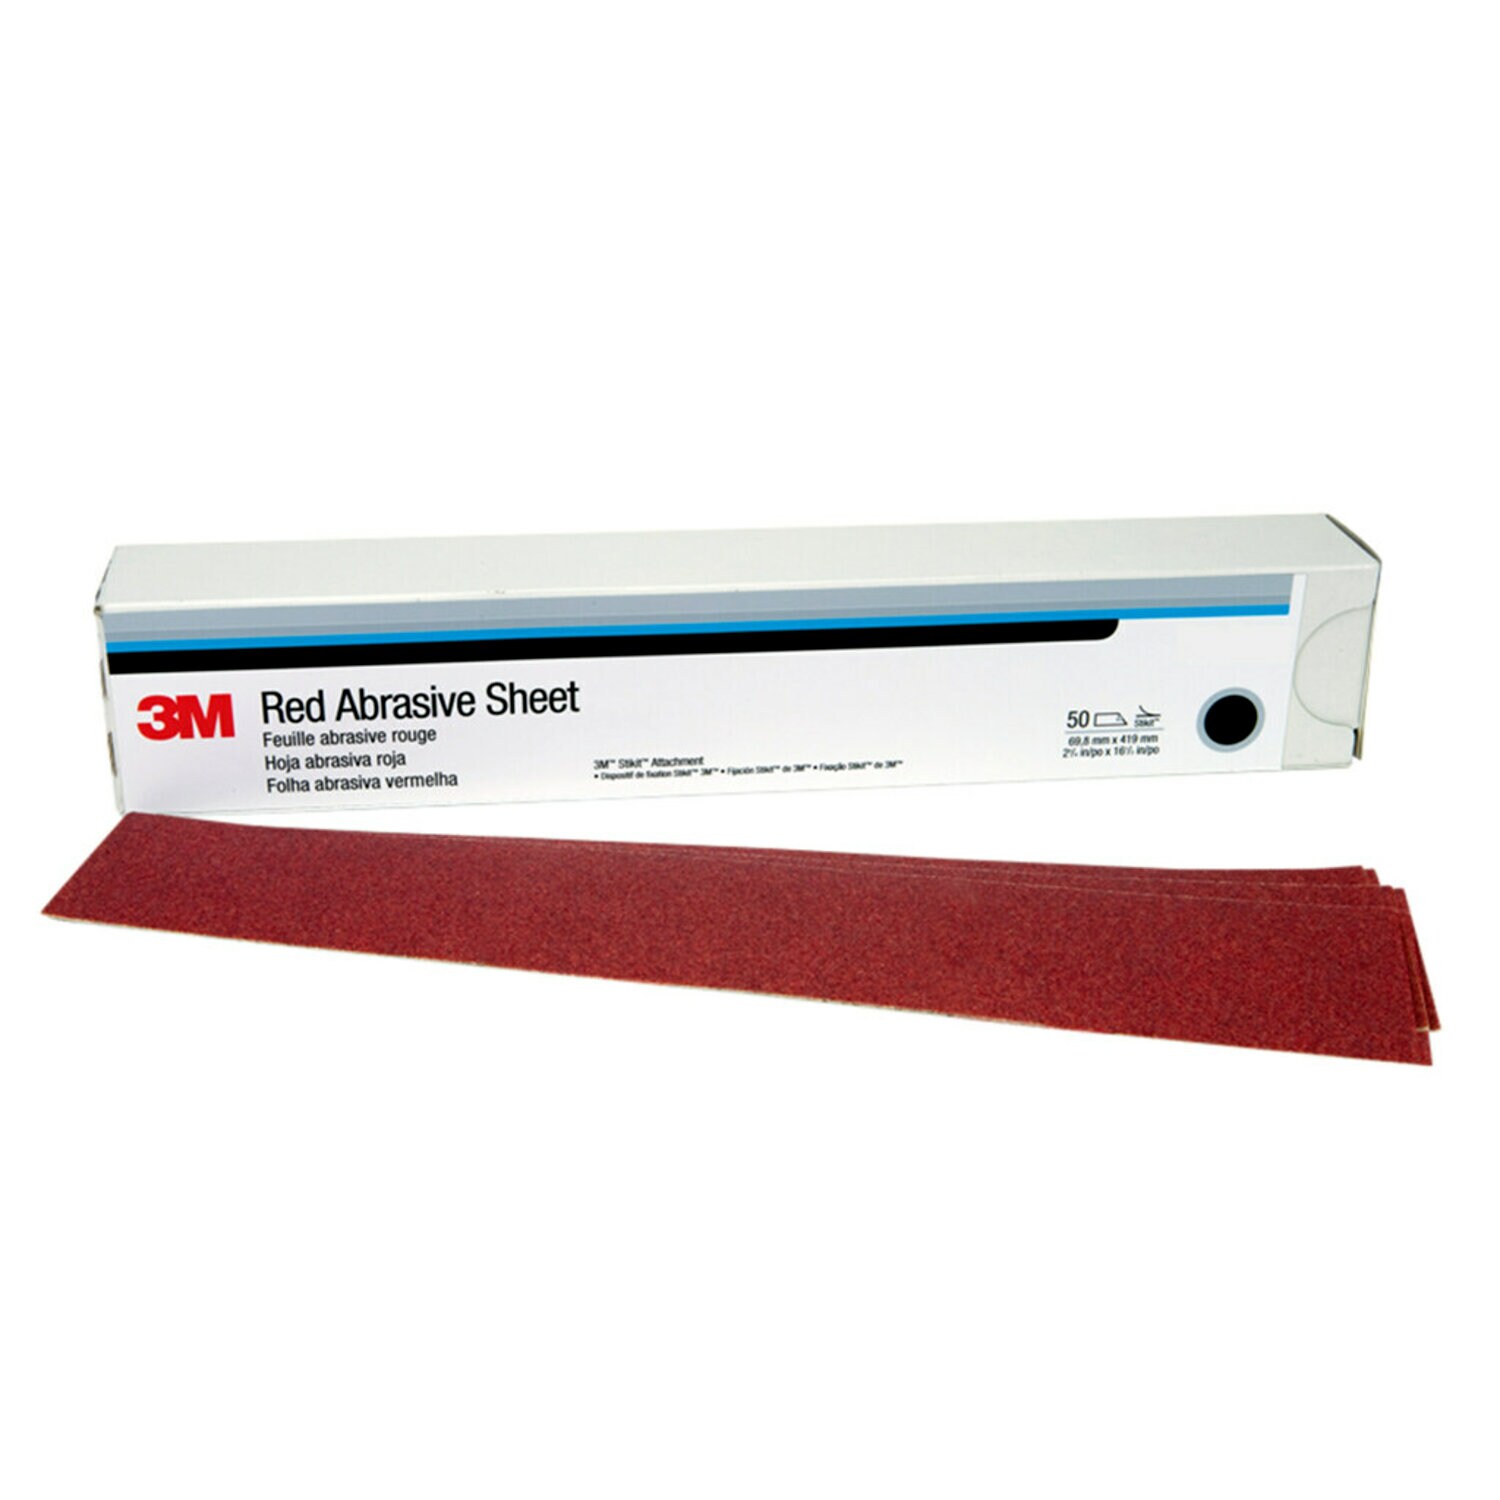 7000119800 - 3M Hookit Red Abrasive Sheet, 01178, P220, 2-3/4 in x 16 1/2 in, 25
sheets per carton, 5 cartons per case